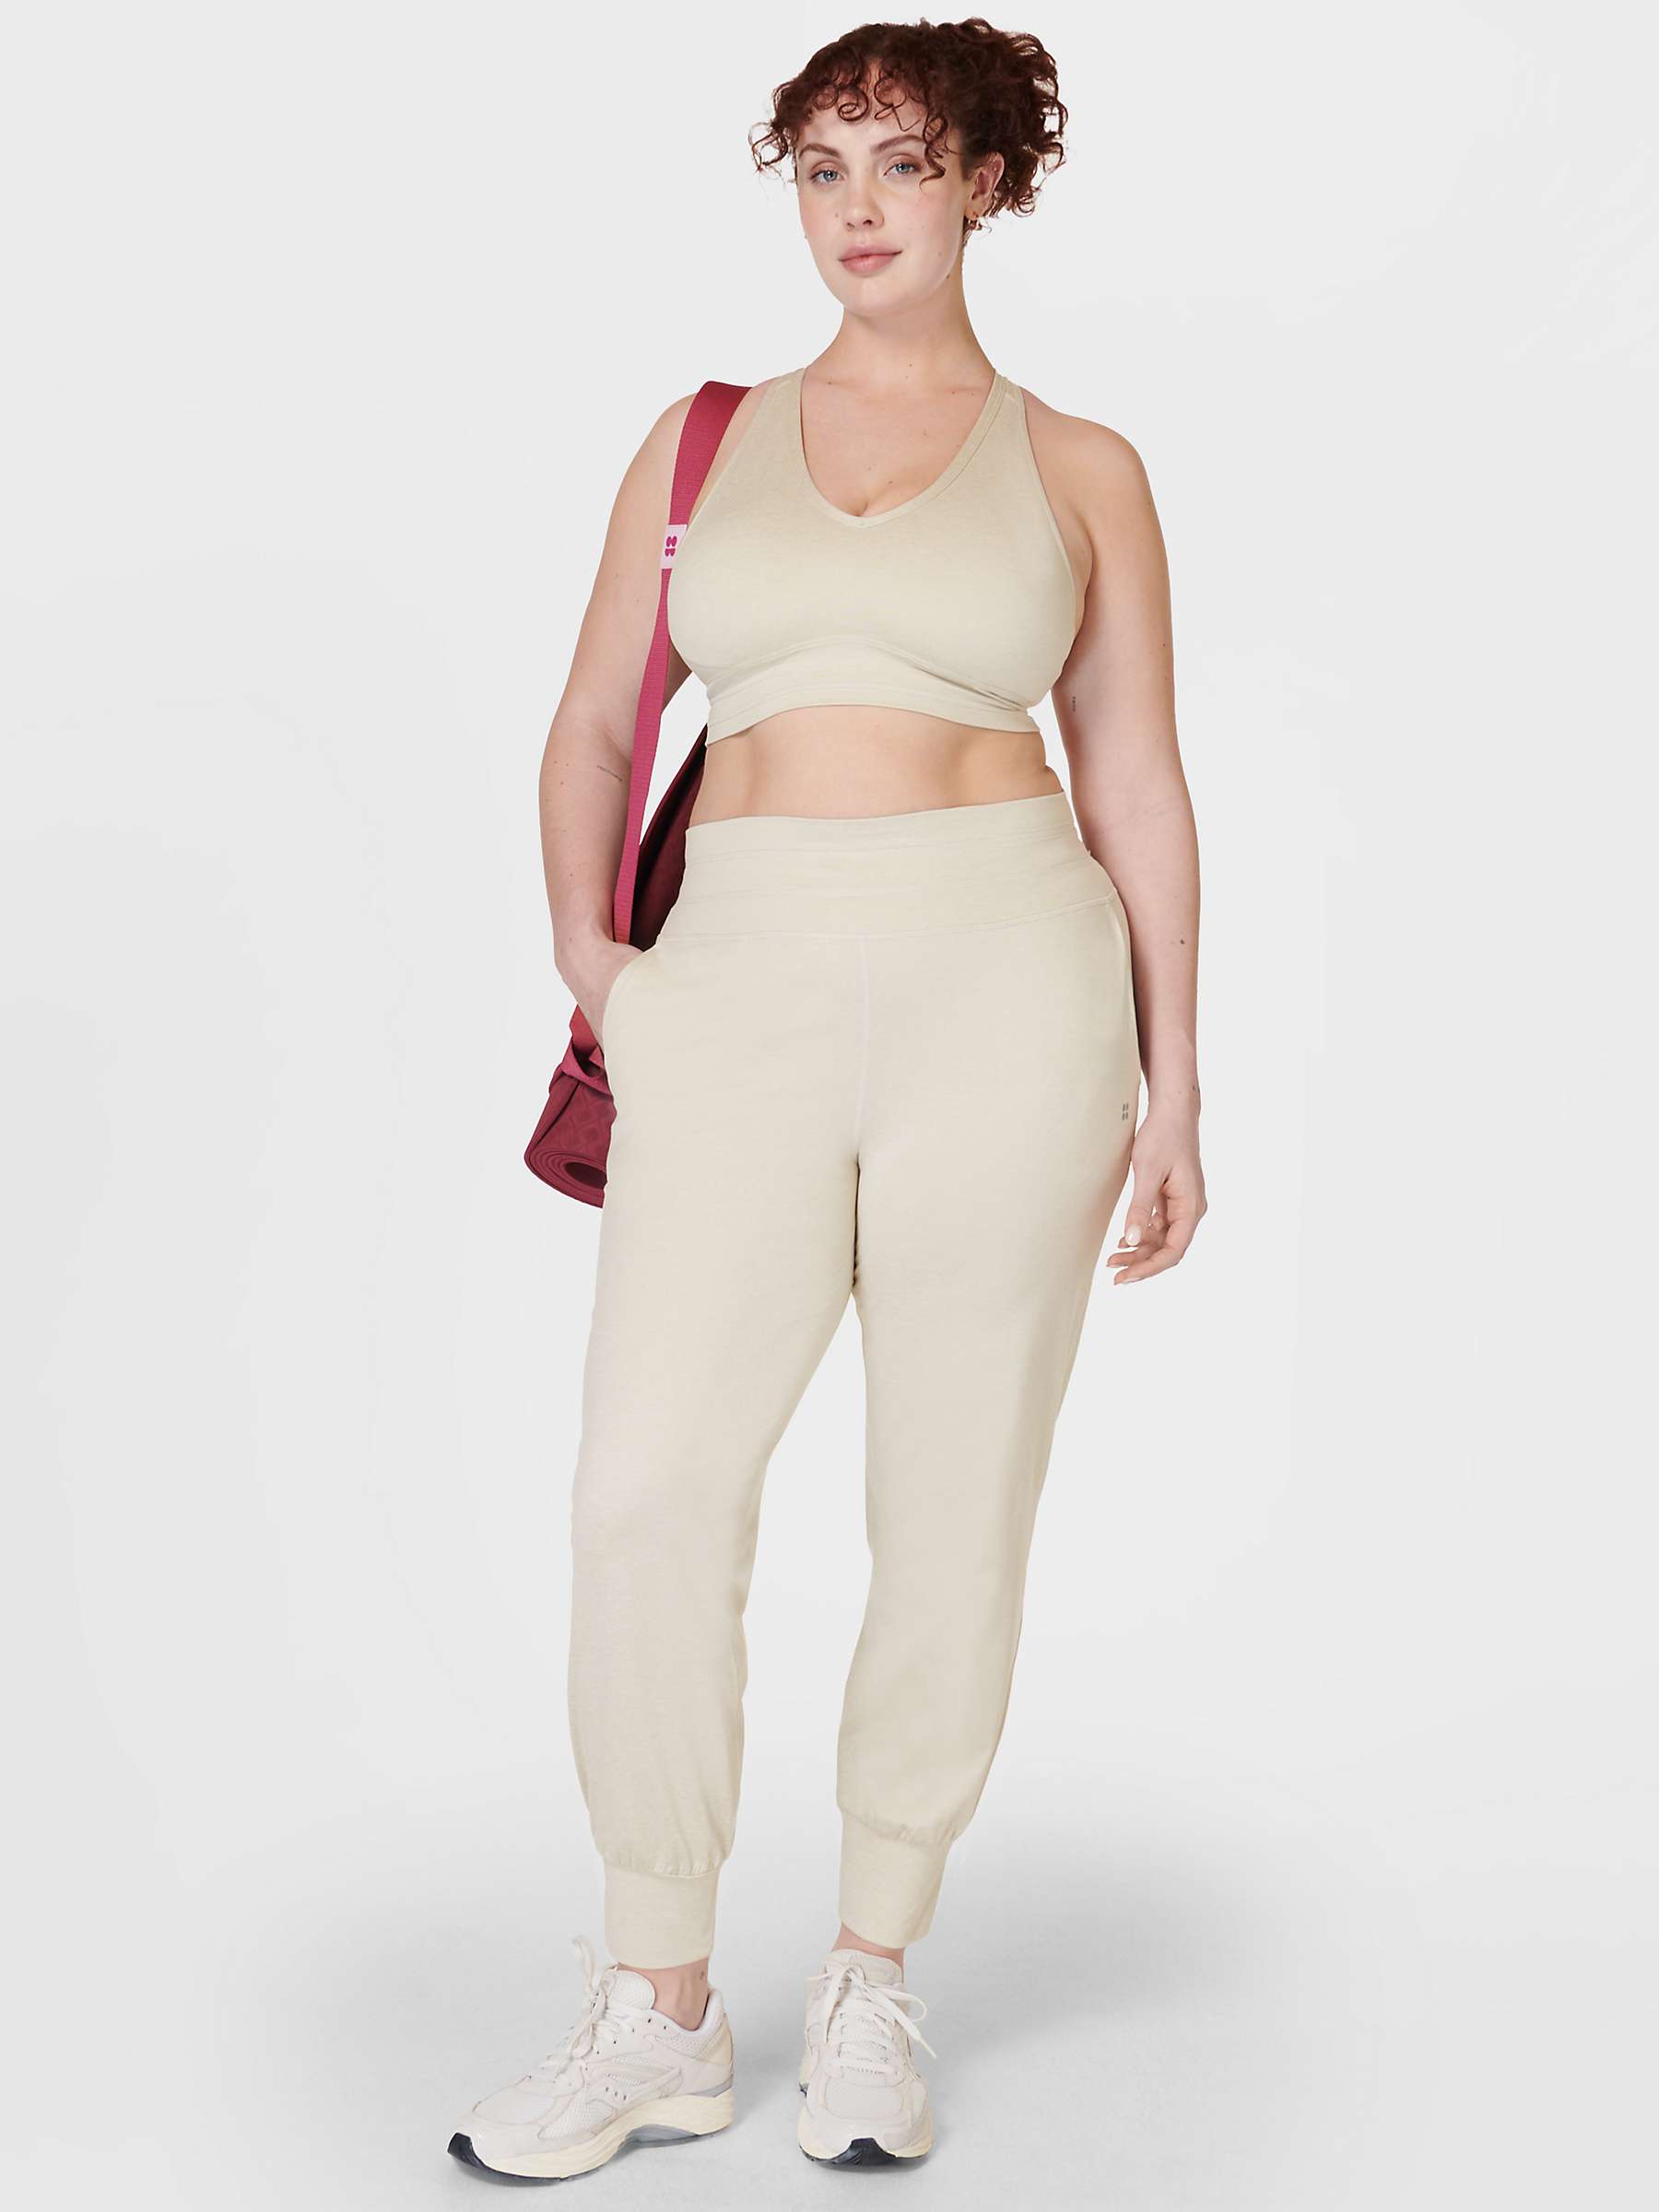 Buy Sweaty Betty Gaia 29" Yoga Pants, Creme Beige Marl Online at johnlewis.com